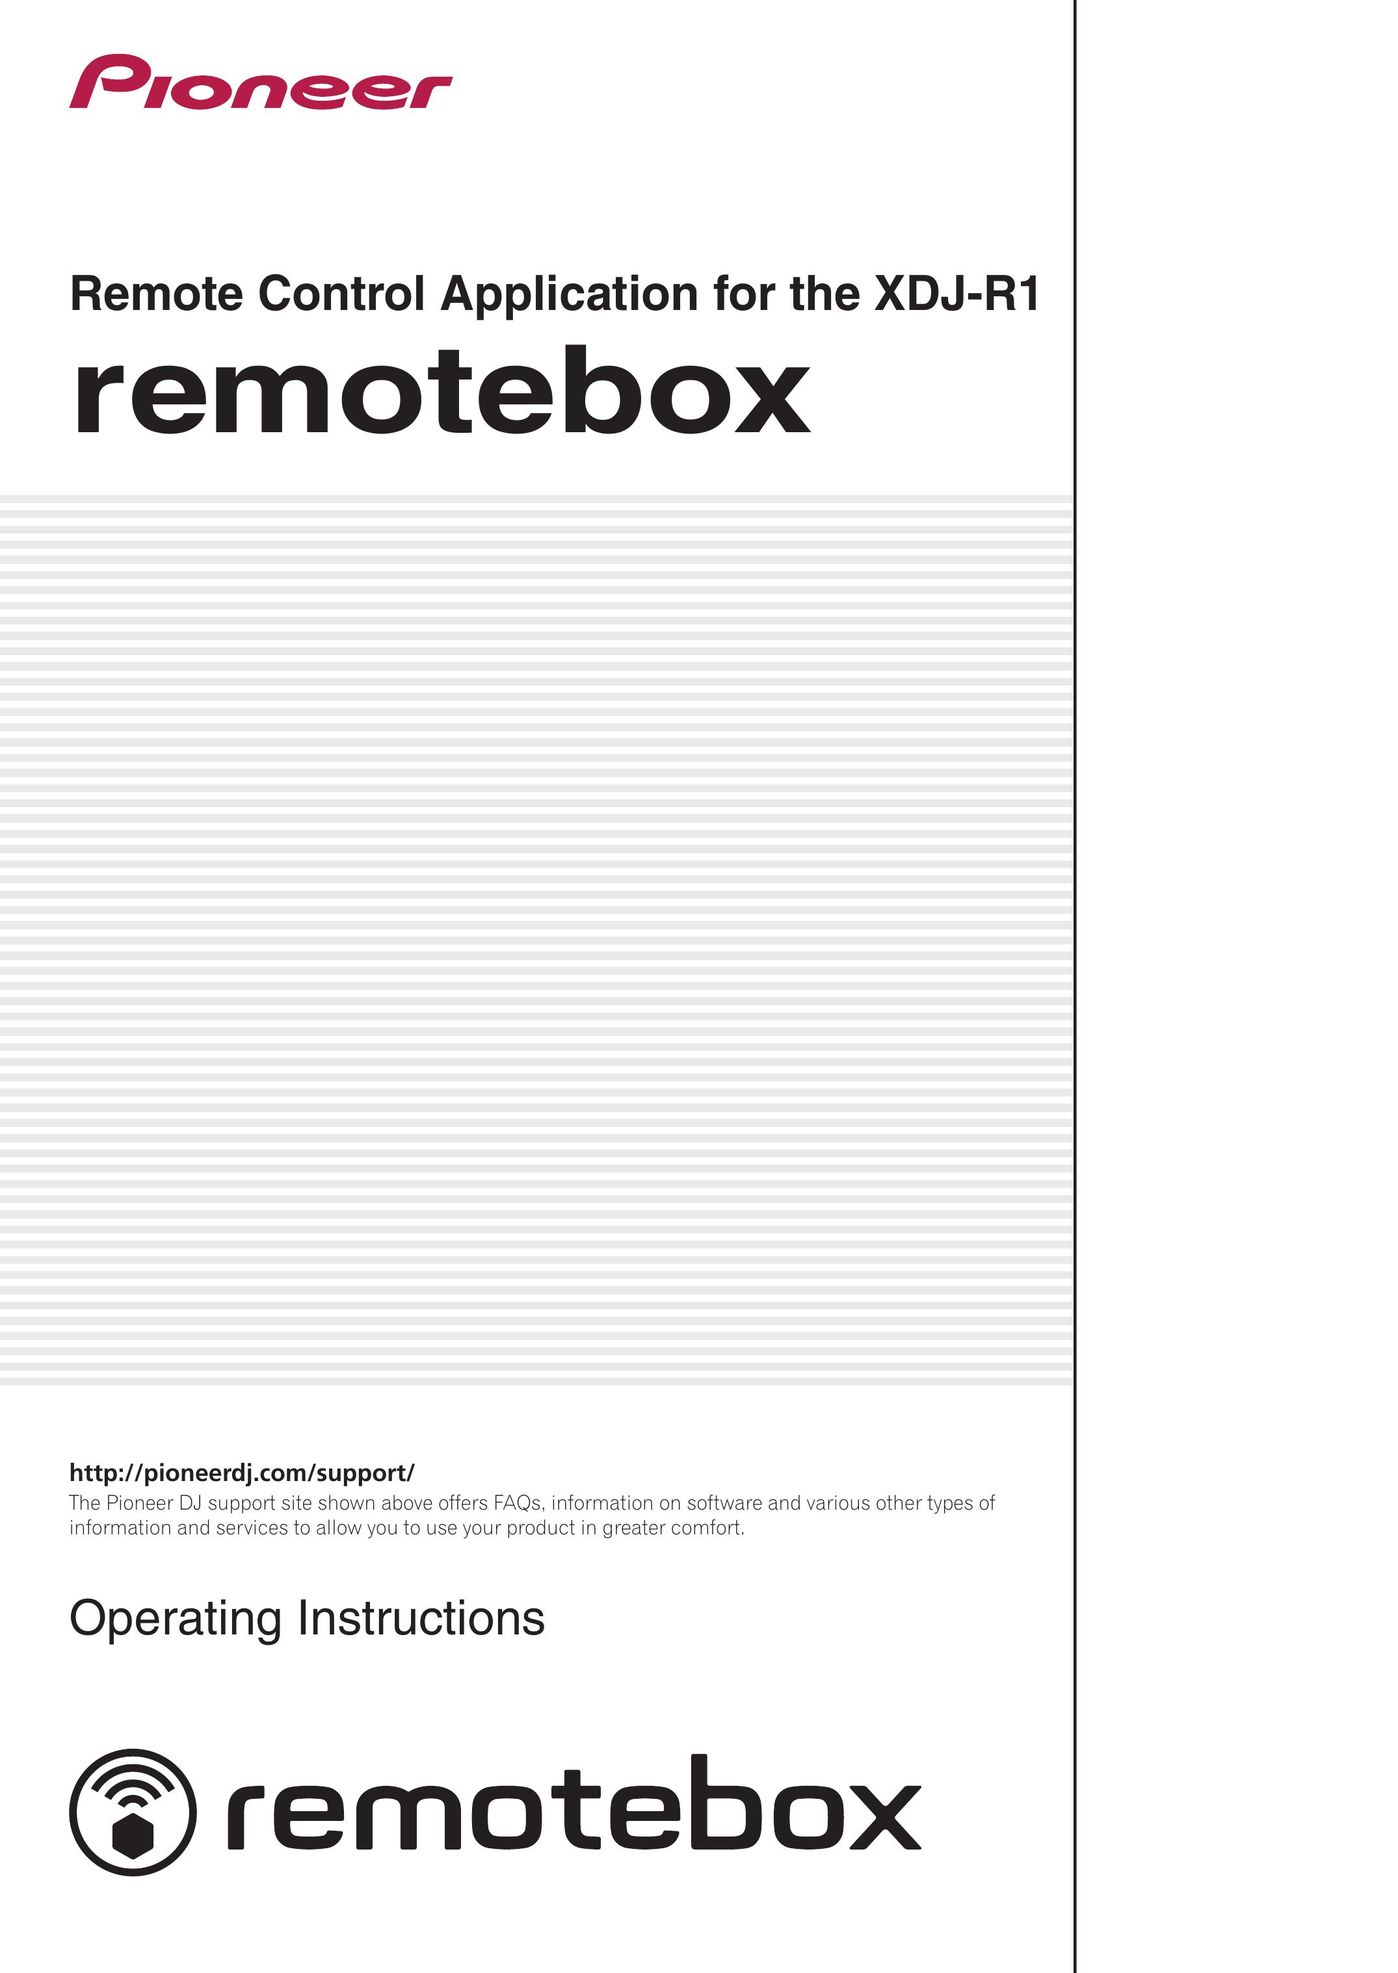 Pioneer remotebox Universal Remote User Manual